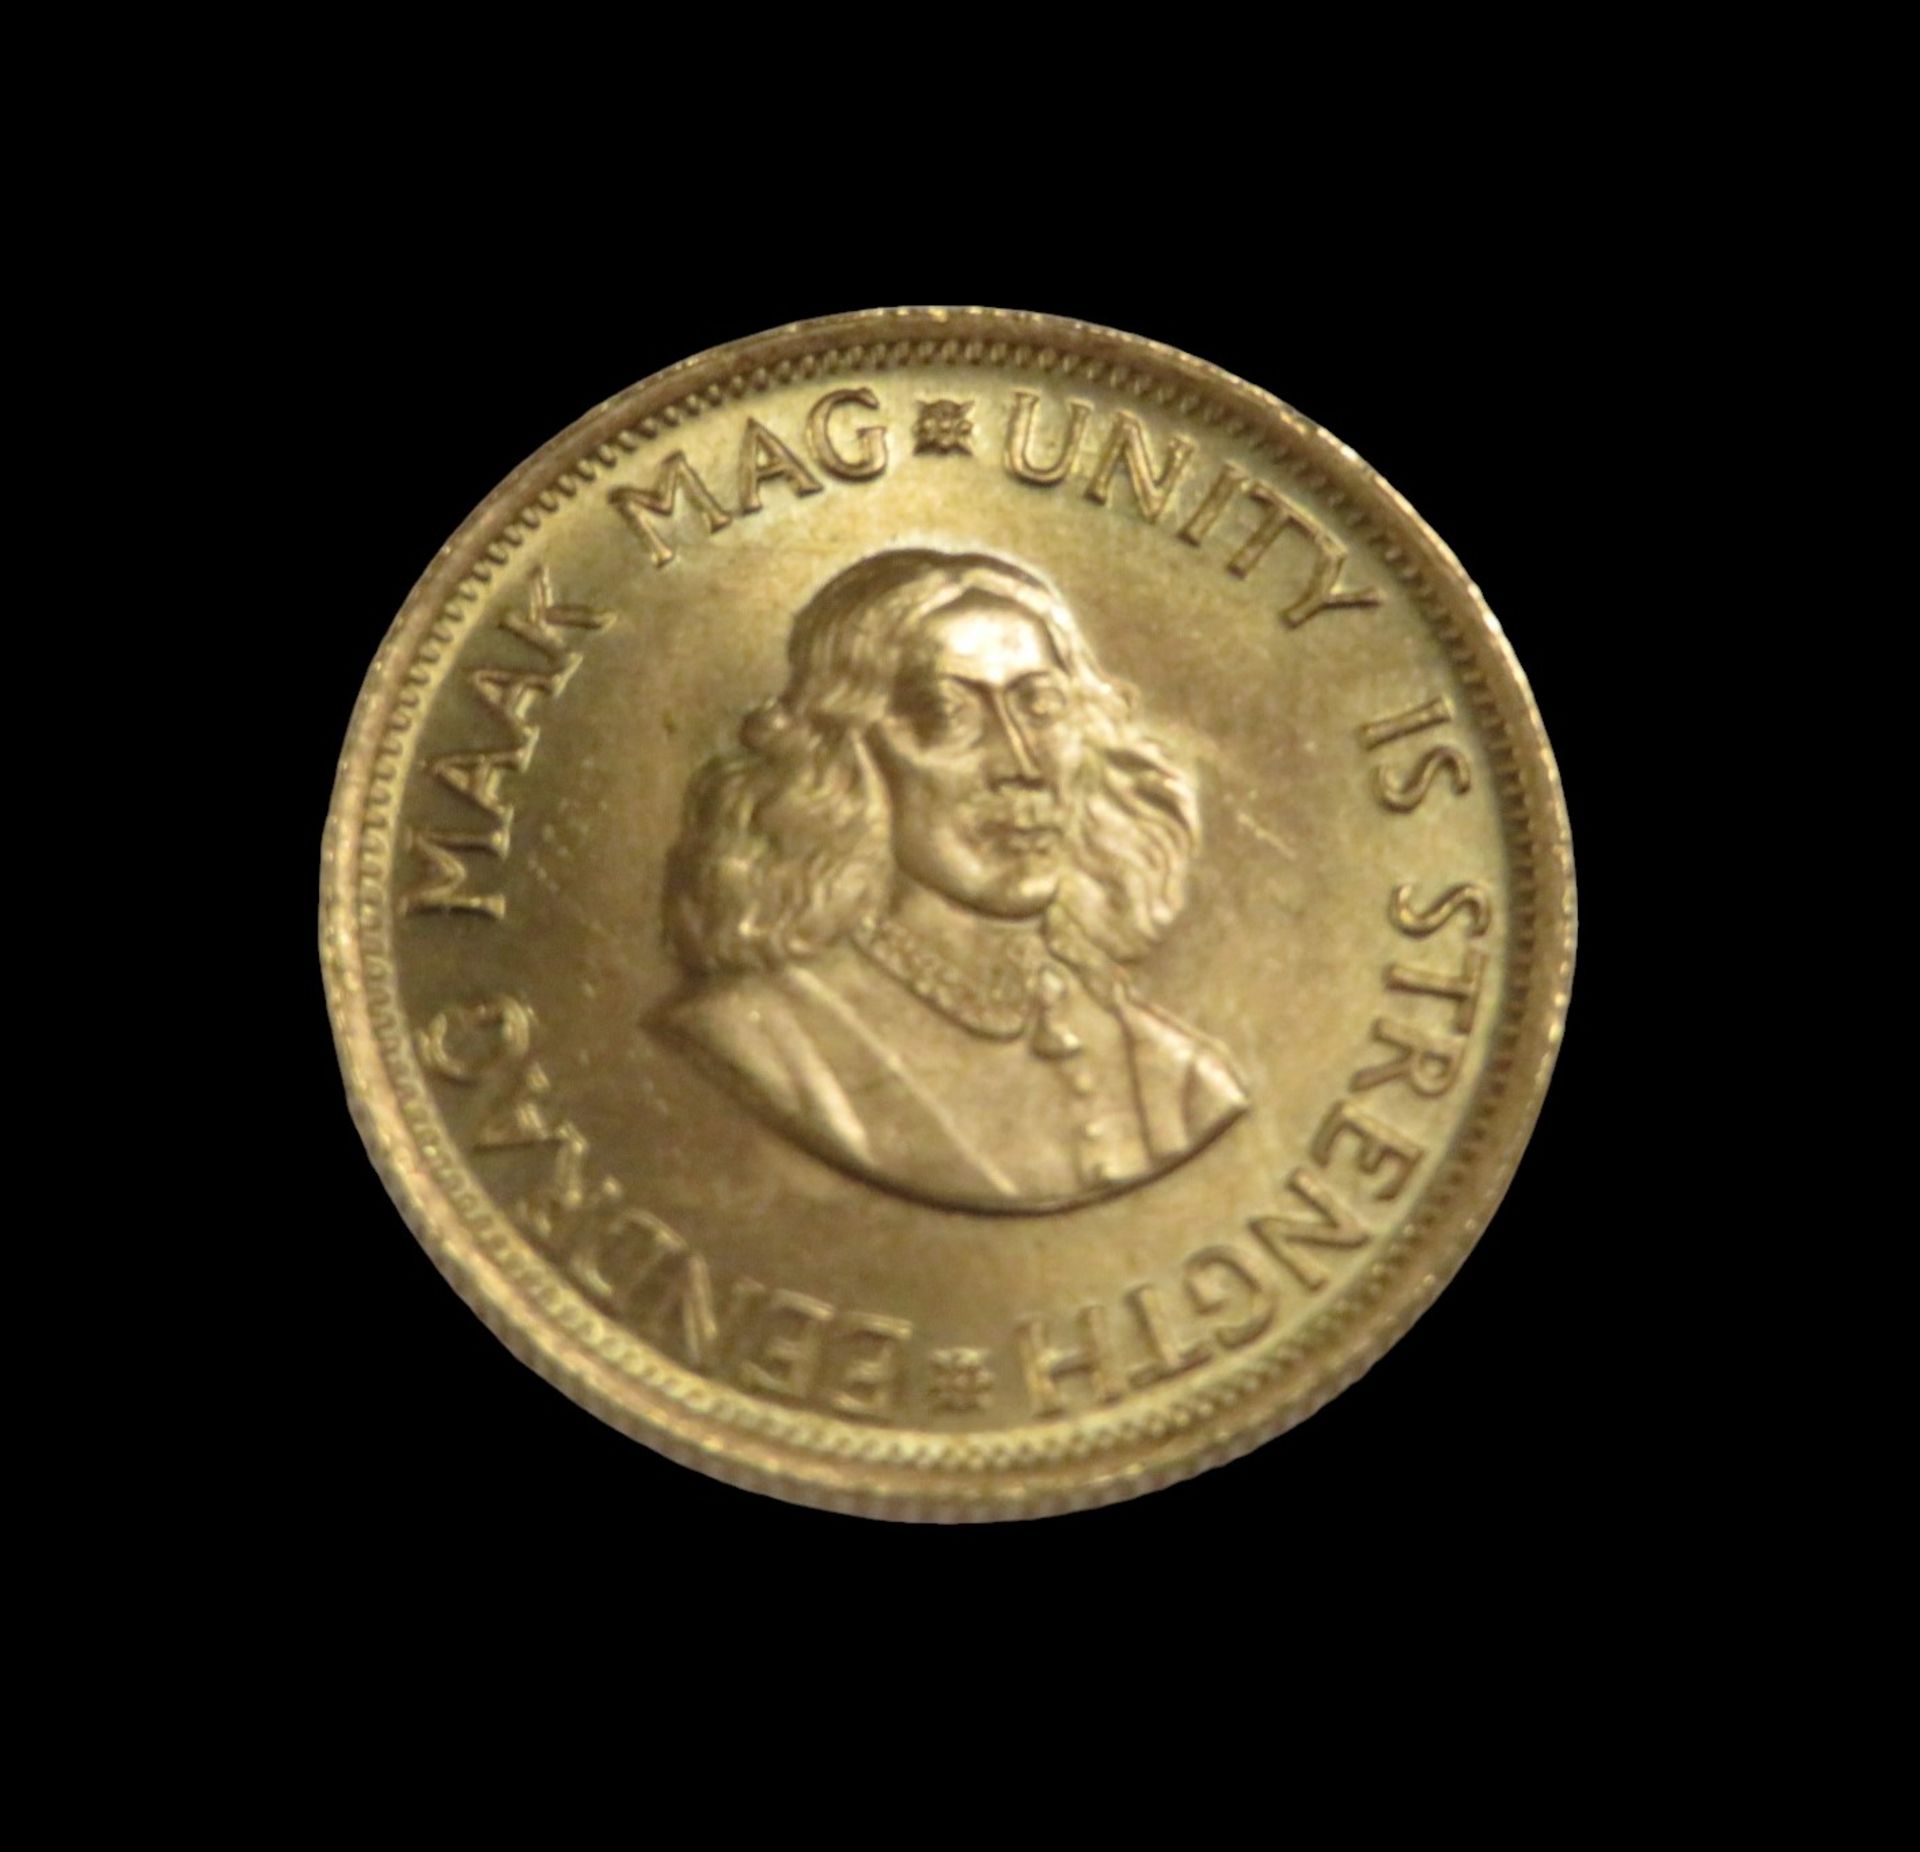 Goldmünze, 2 Rand, Südafrika, 1971, 916,7/000, 8 g, d 2,2 cm. - Image 2 of 2